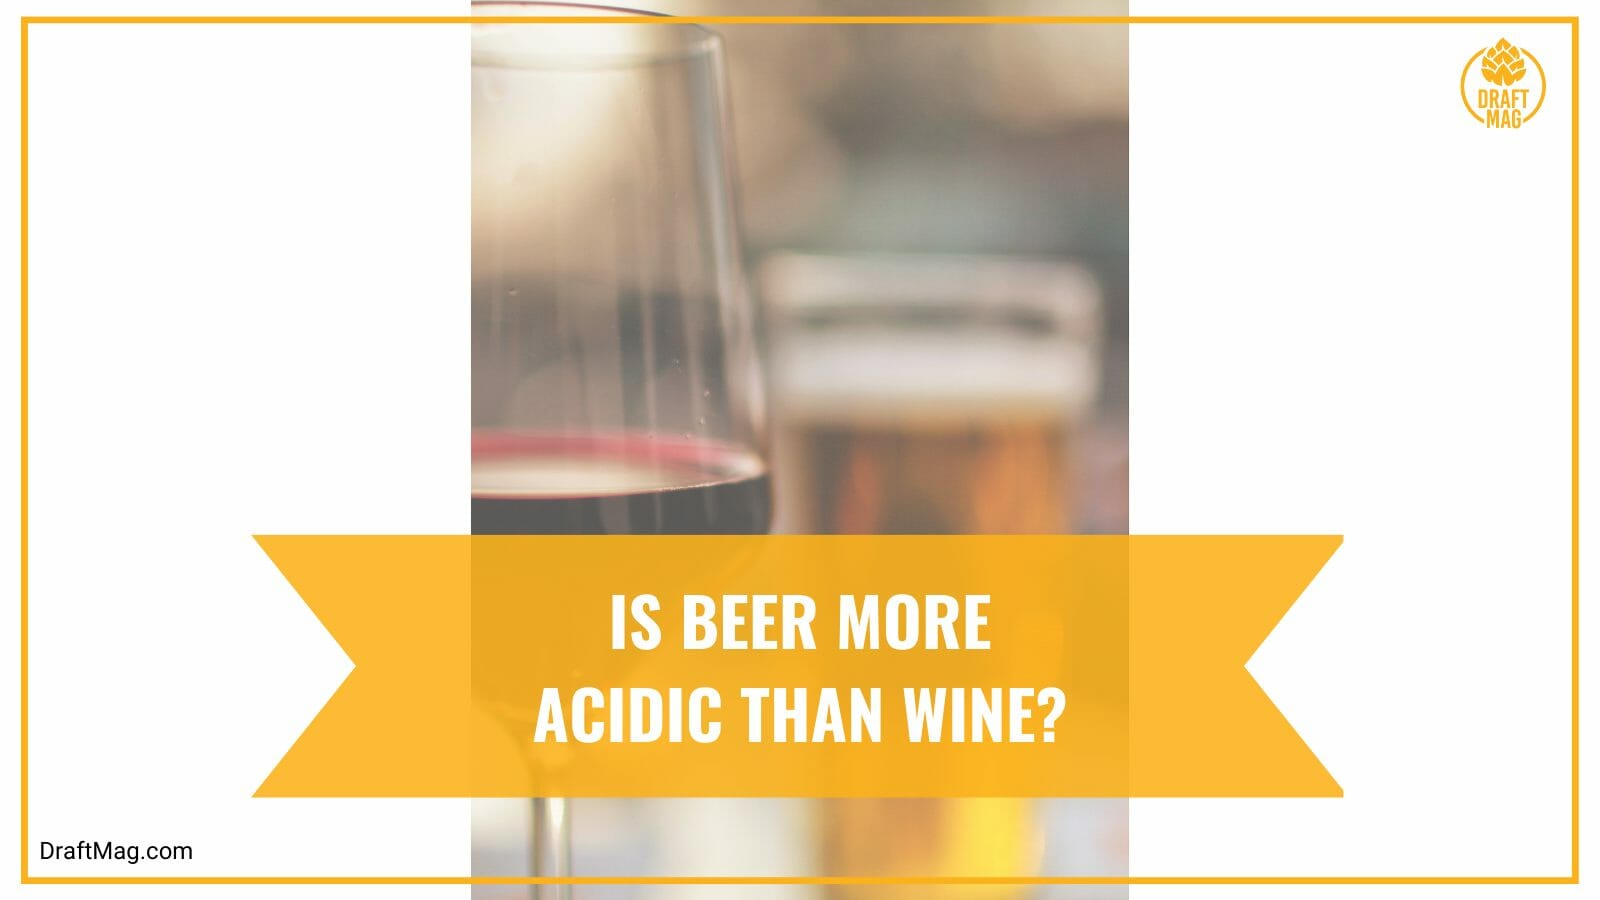 Beer more acidic than wine